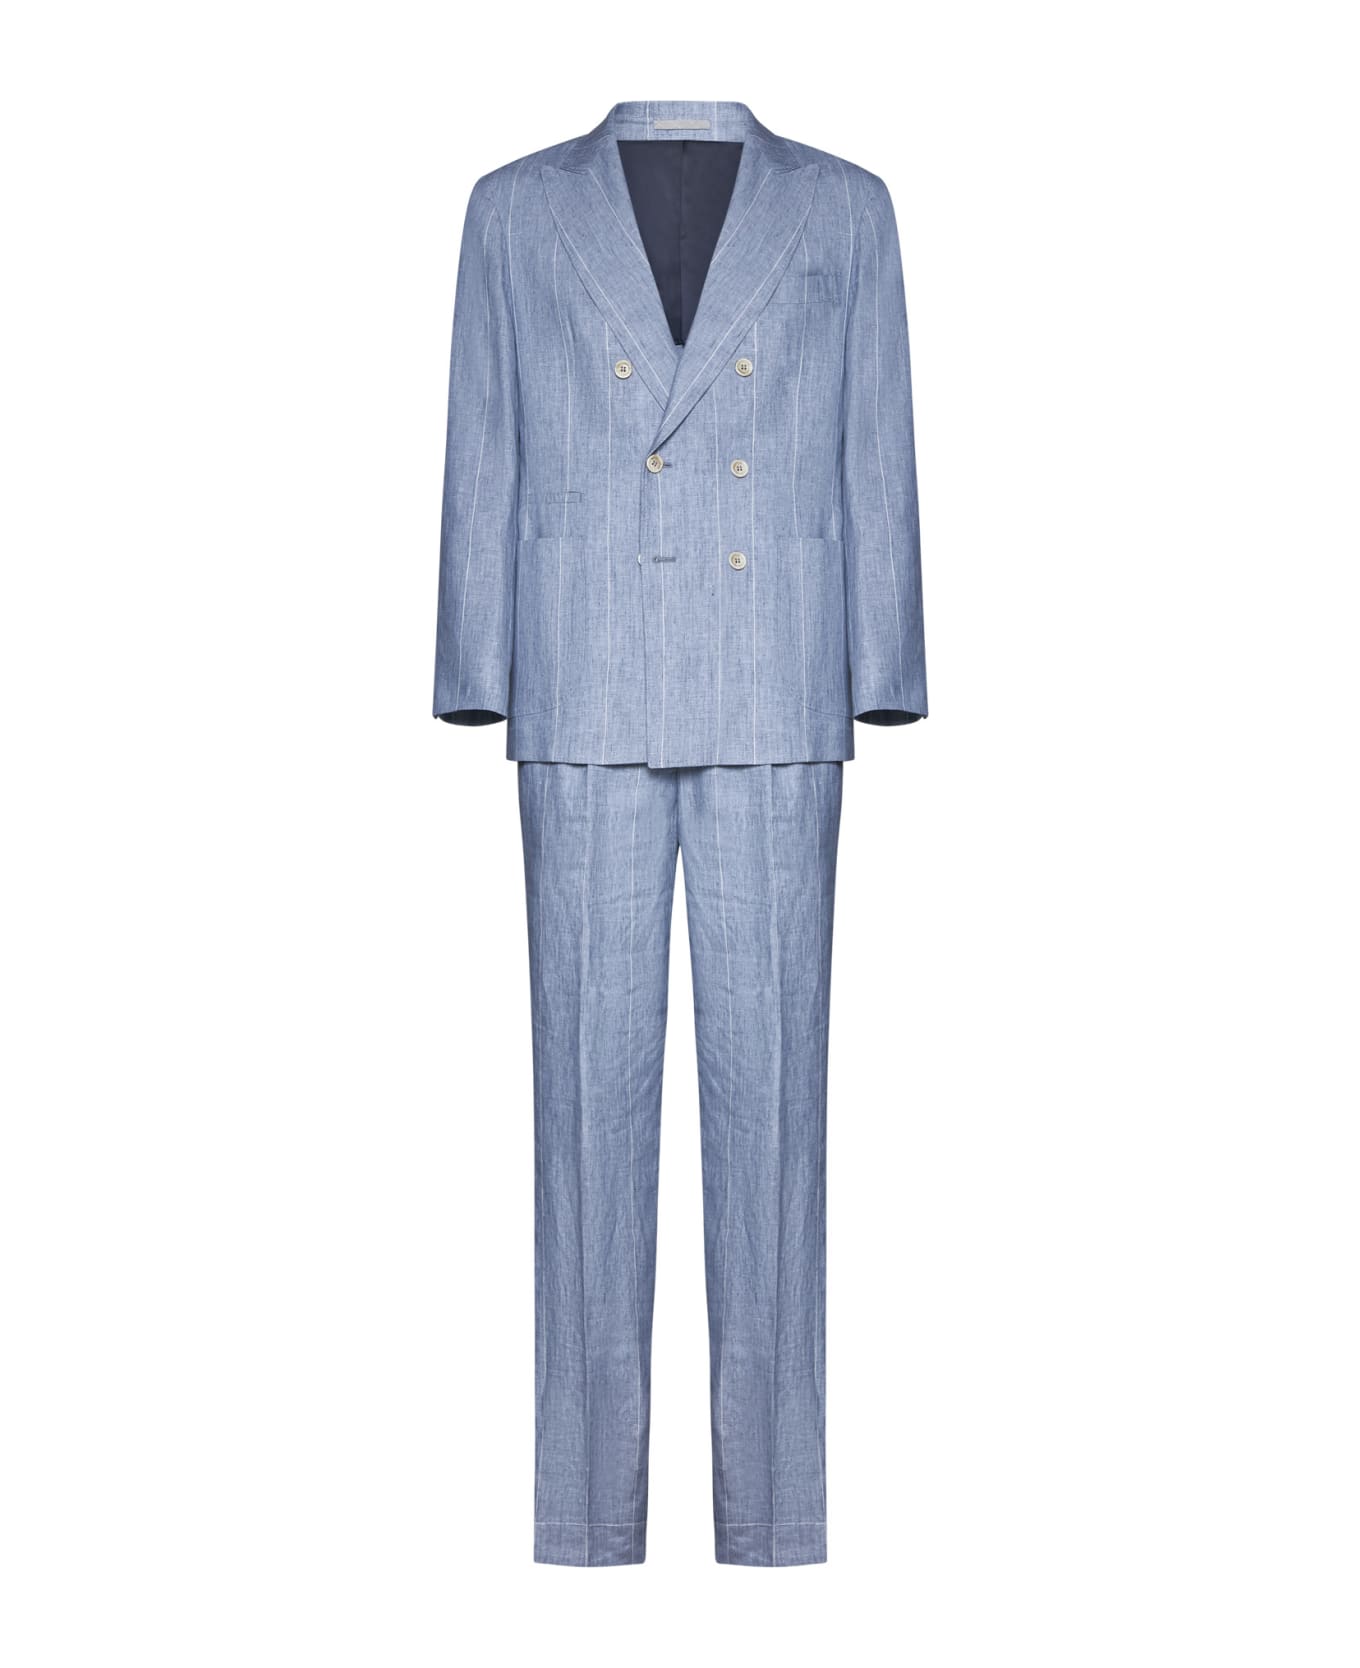 Brunello Cucinelli Double-breasted Striped Tailored Suit - Celeste スーツ